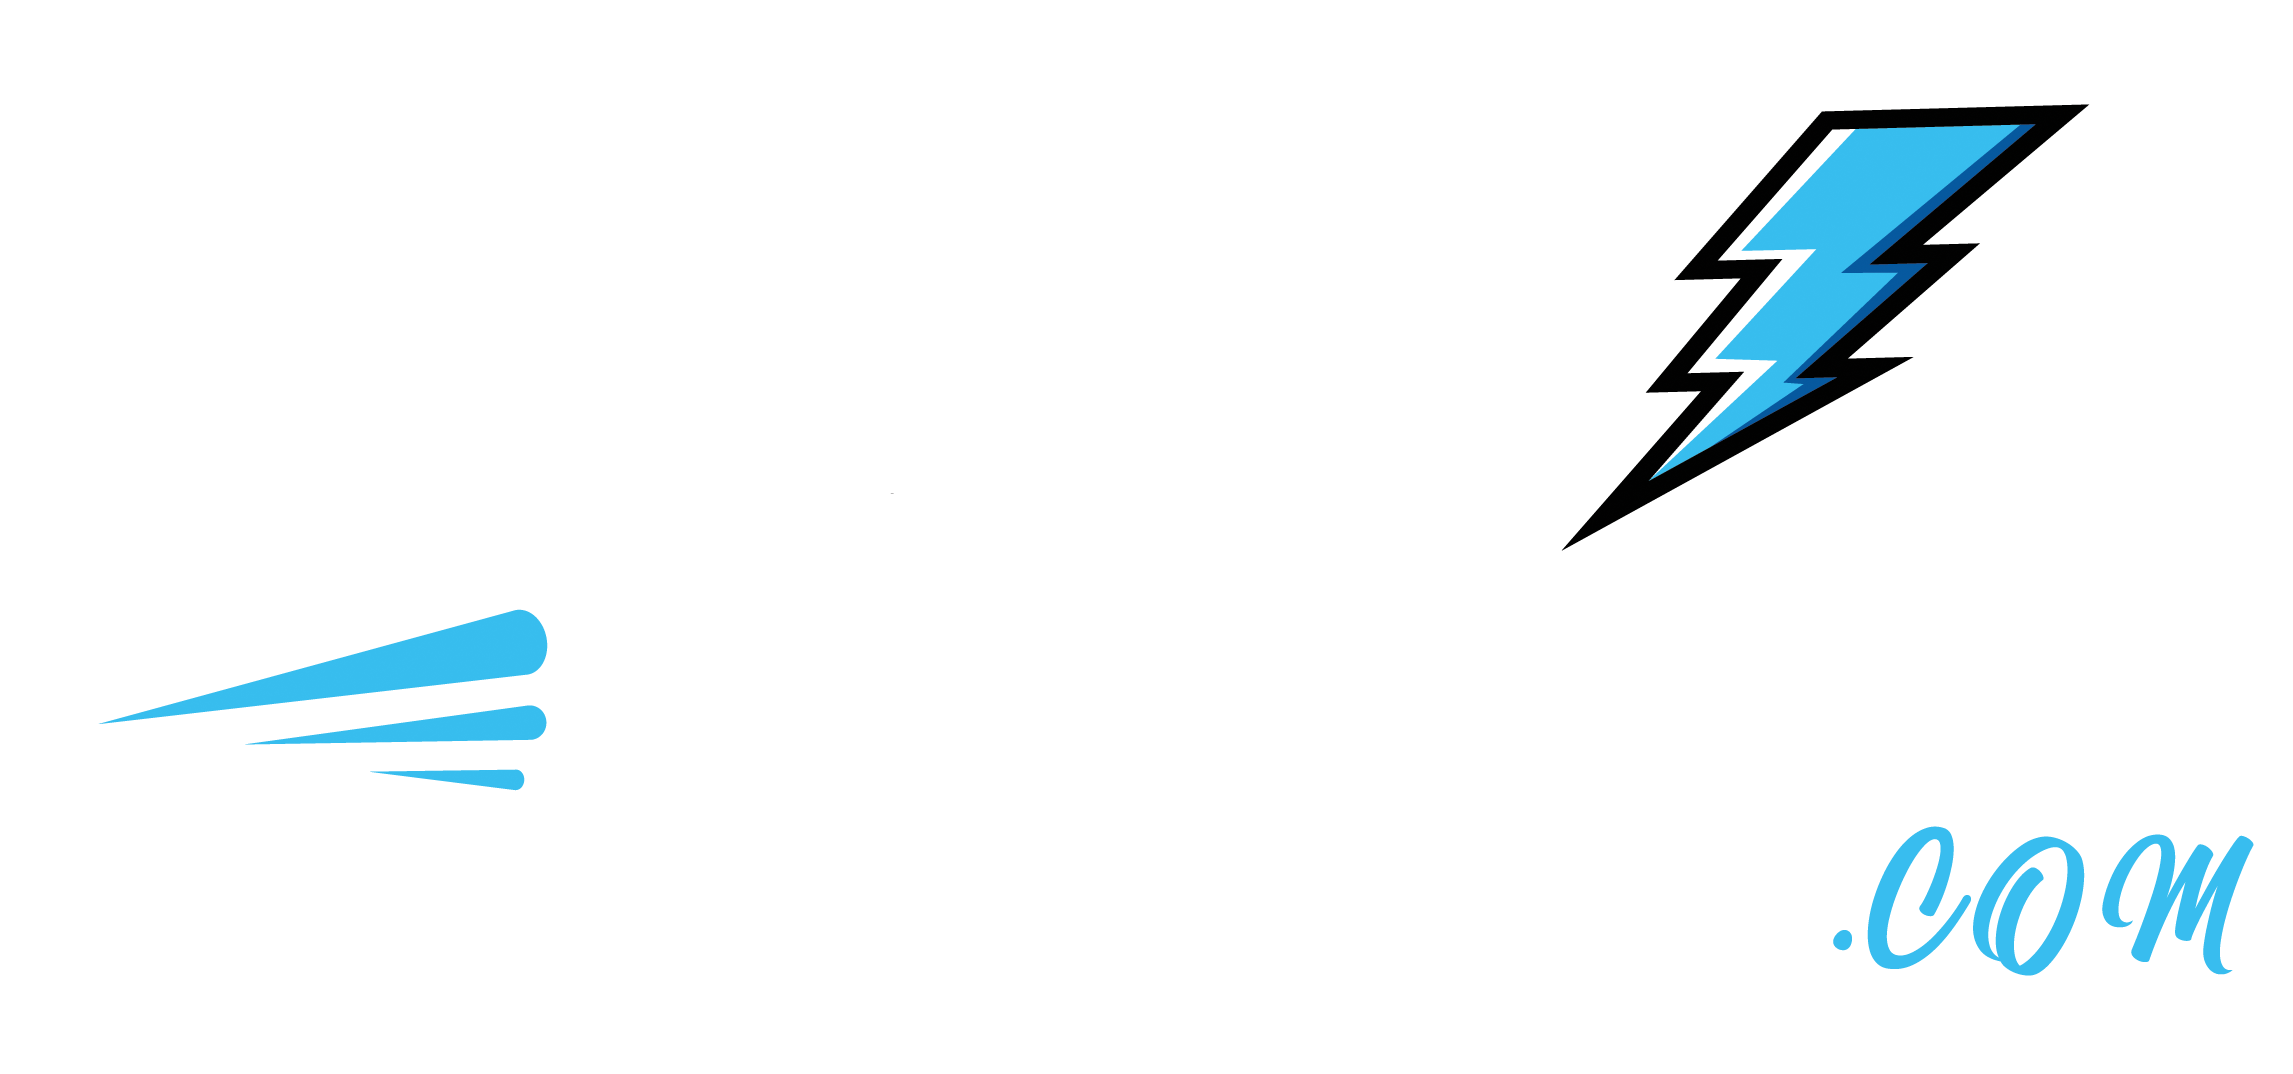 Randy Rides